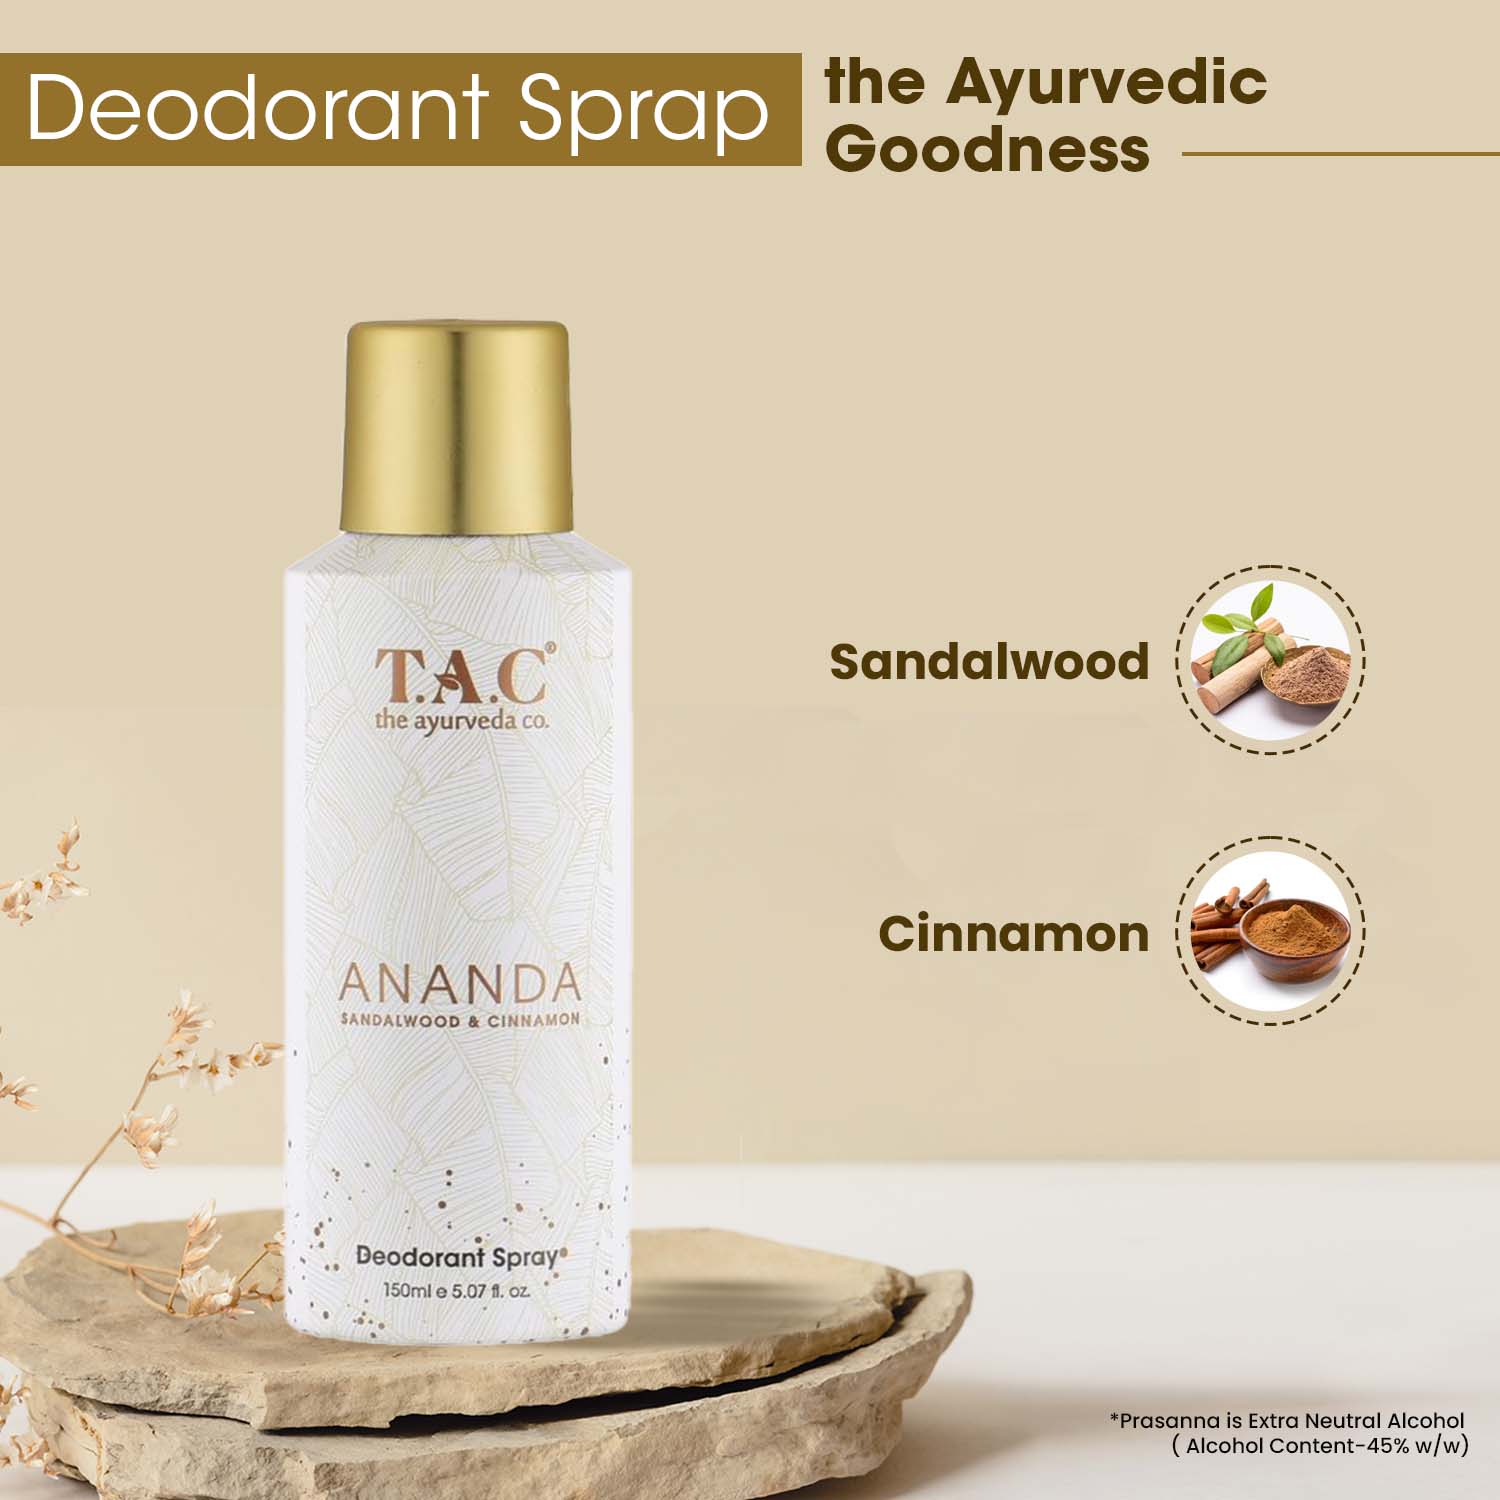 Ananda Sandalwood & Cinnamon Deodorant Spray